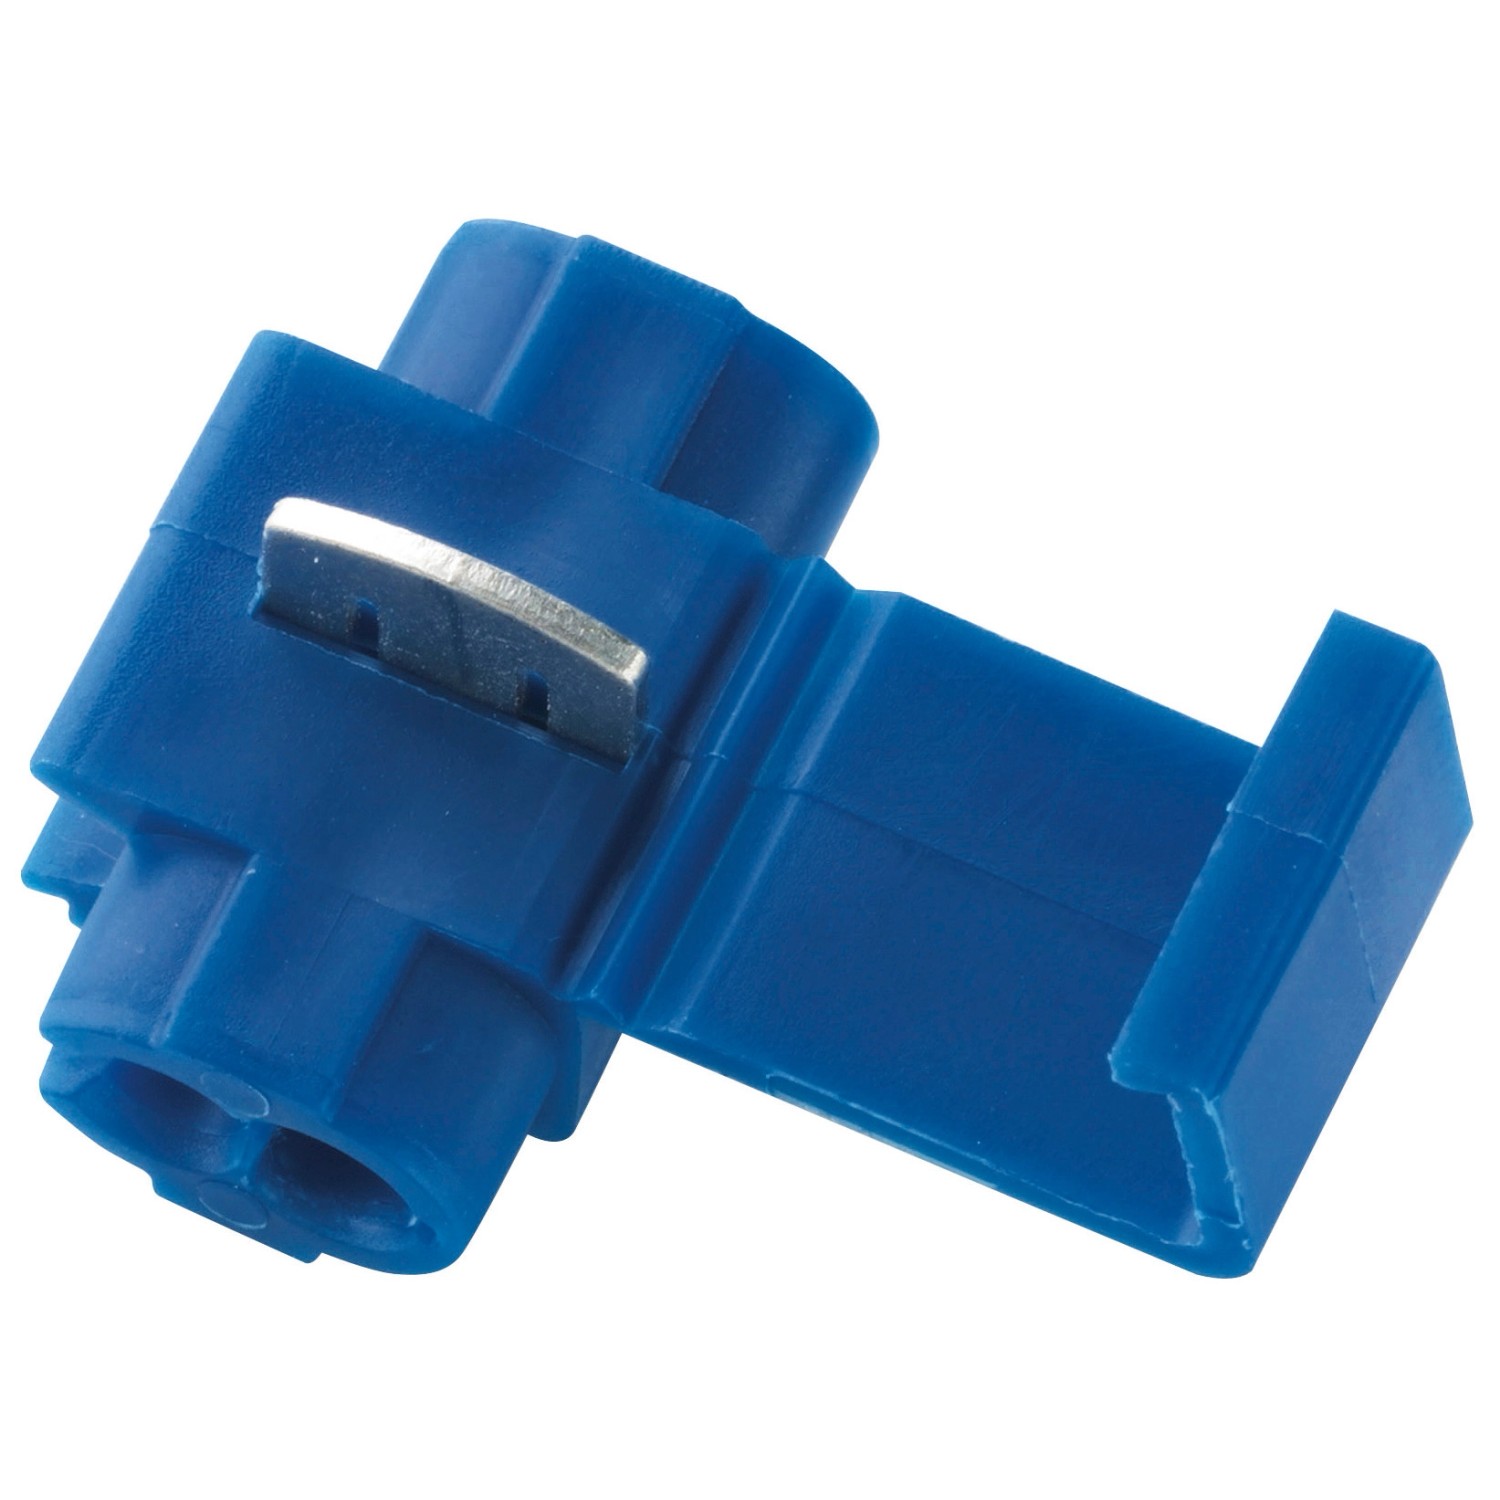 OBI Klemmabzweigverbinder Blau 0,75 mm² - 2,5 mm²